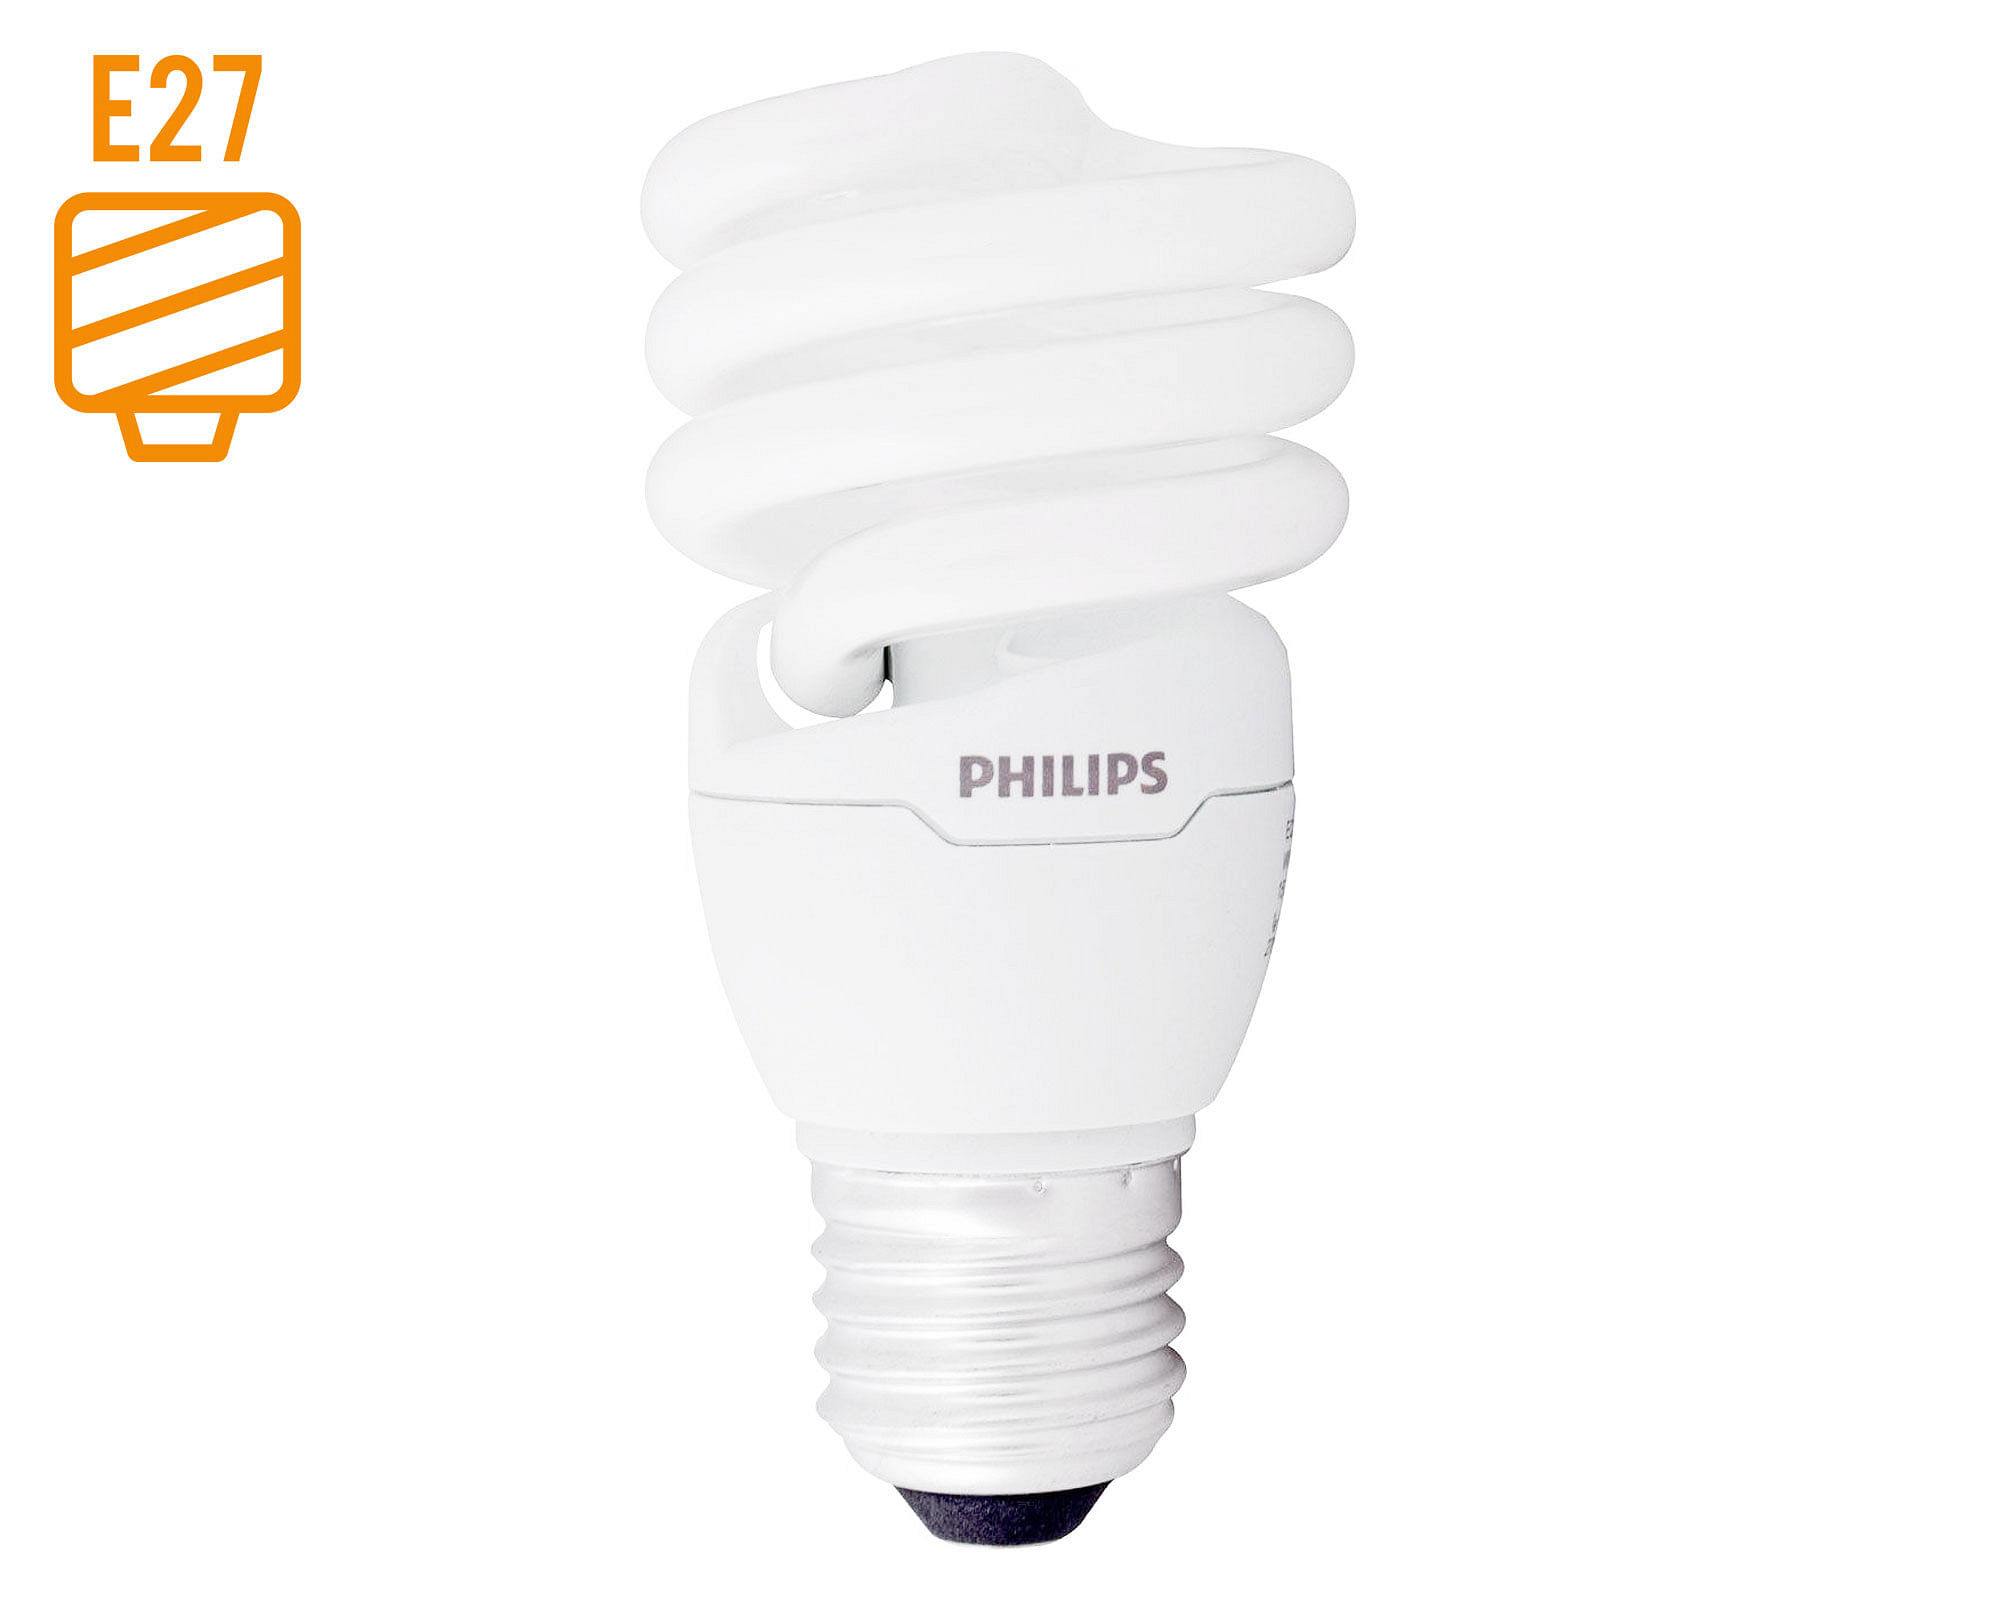 PHILIPS Ampolleta LED Inteligente Philips hue GU10 5W Fria & Calida